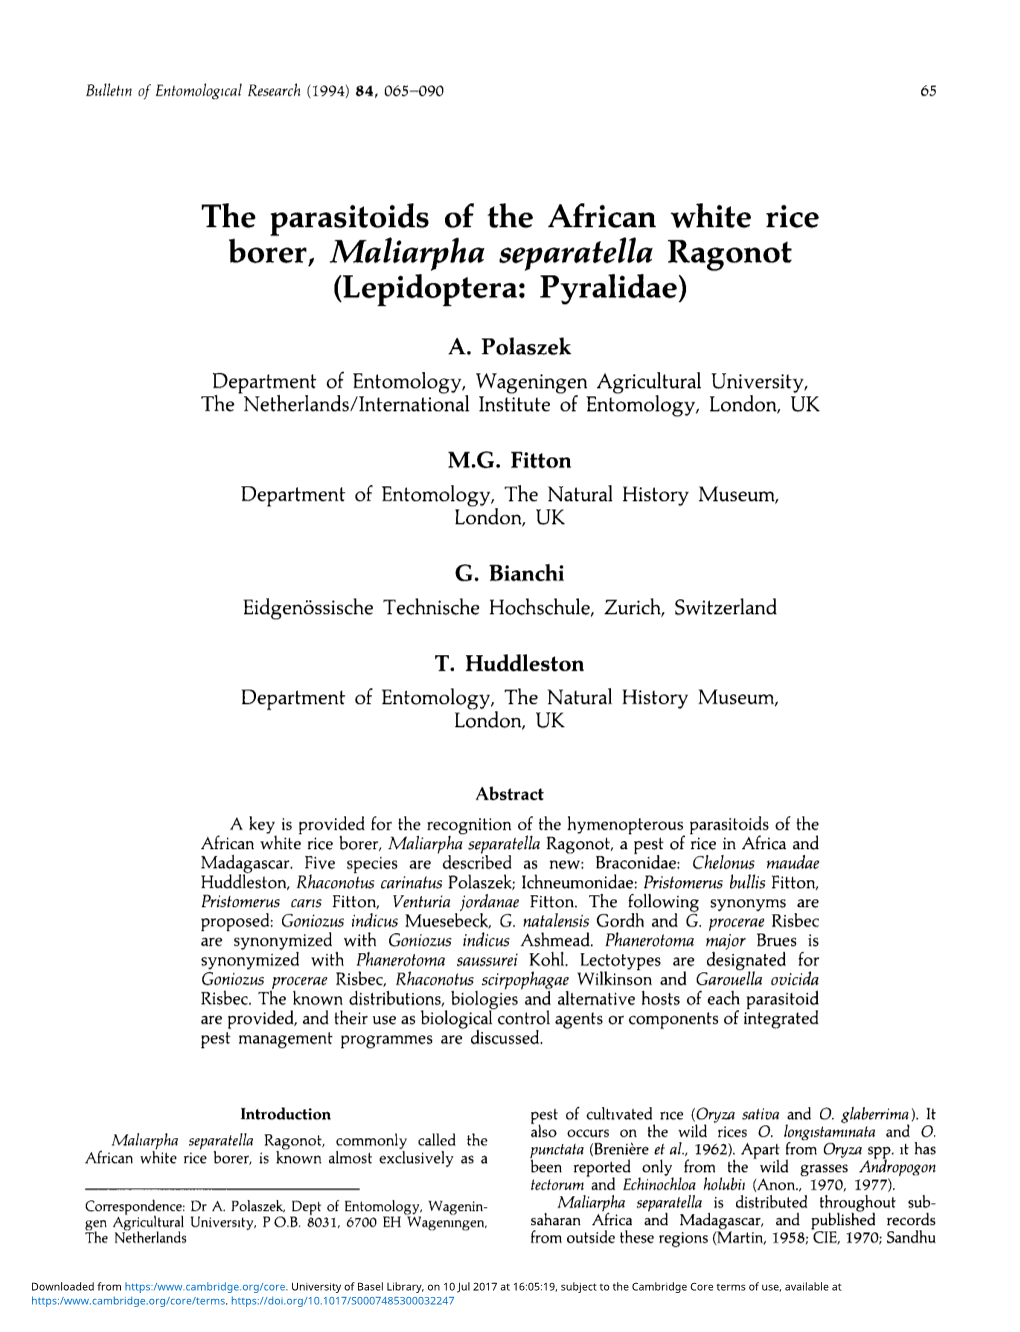 The Parasitoids of the African White Rice Borer, Maliarpha Separatella Ragonot (Lepidoptera: Pyralidae)